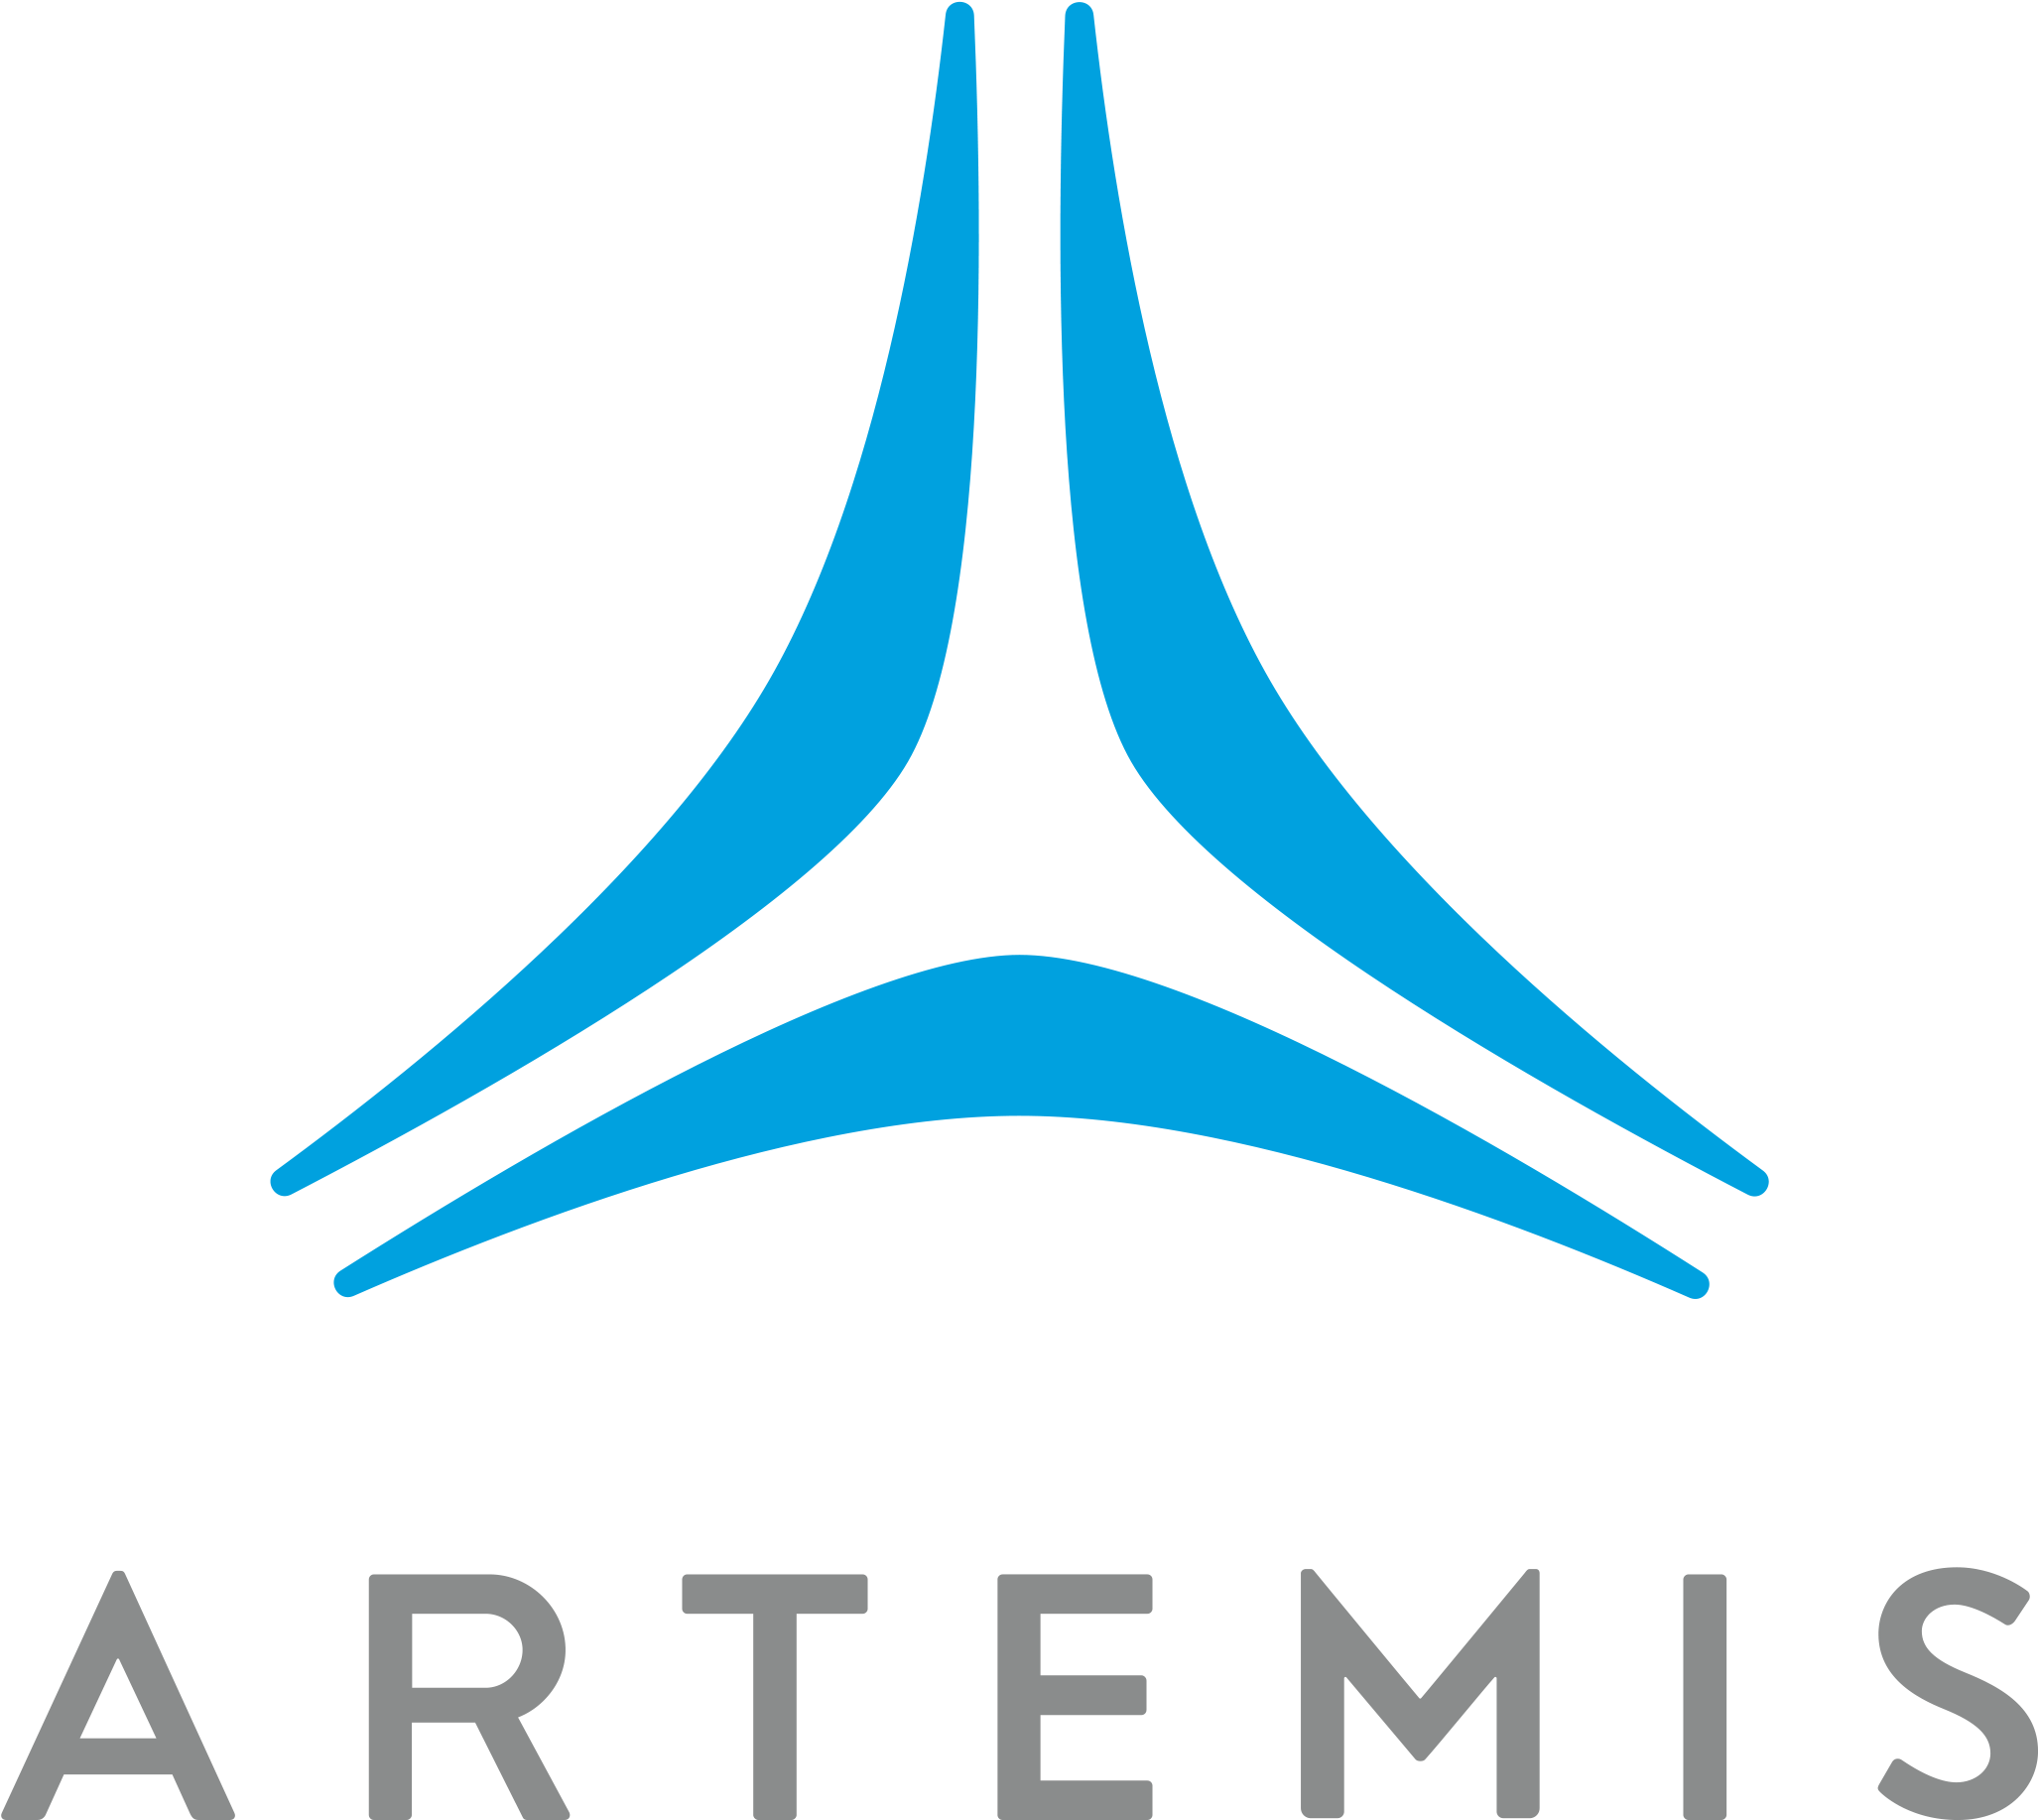 Microsoft Word Logo 2014 Download - Modern Allusions To Artemis (2200x2000)